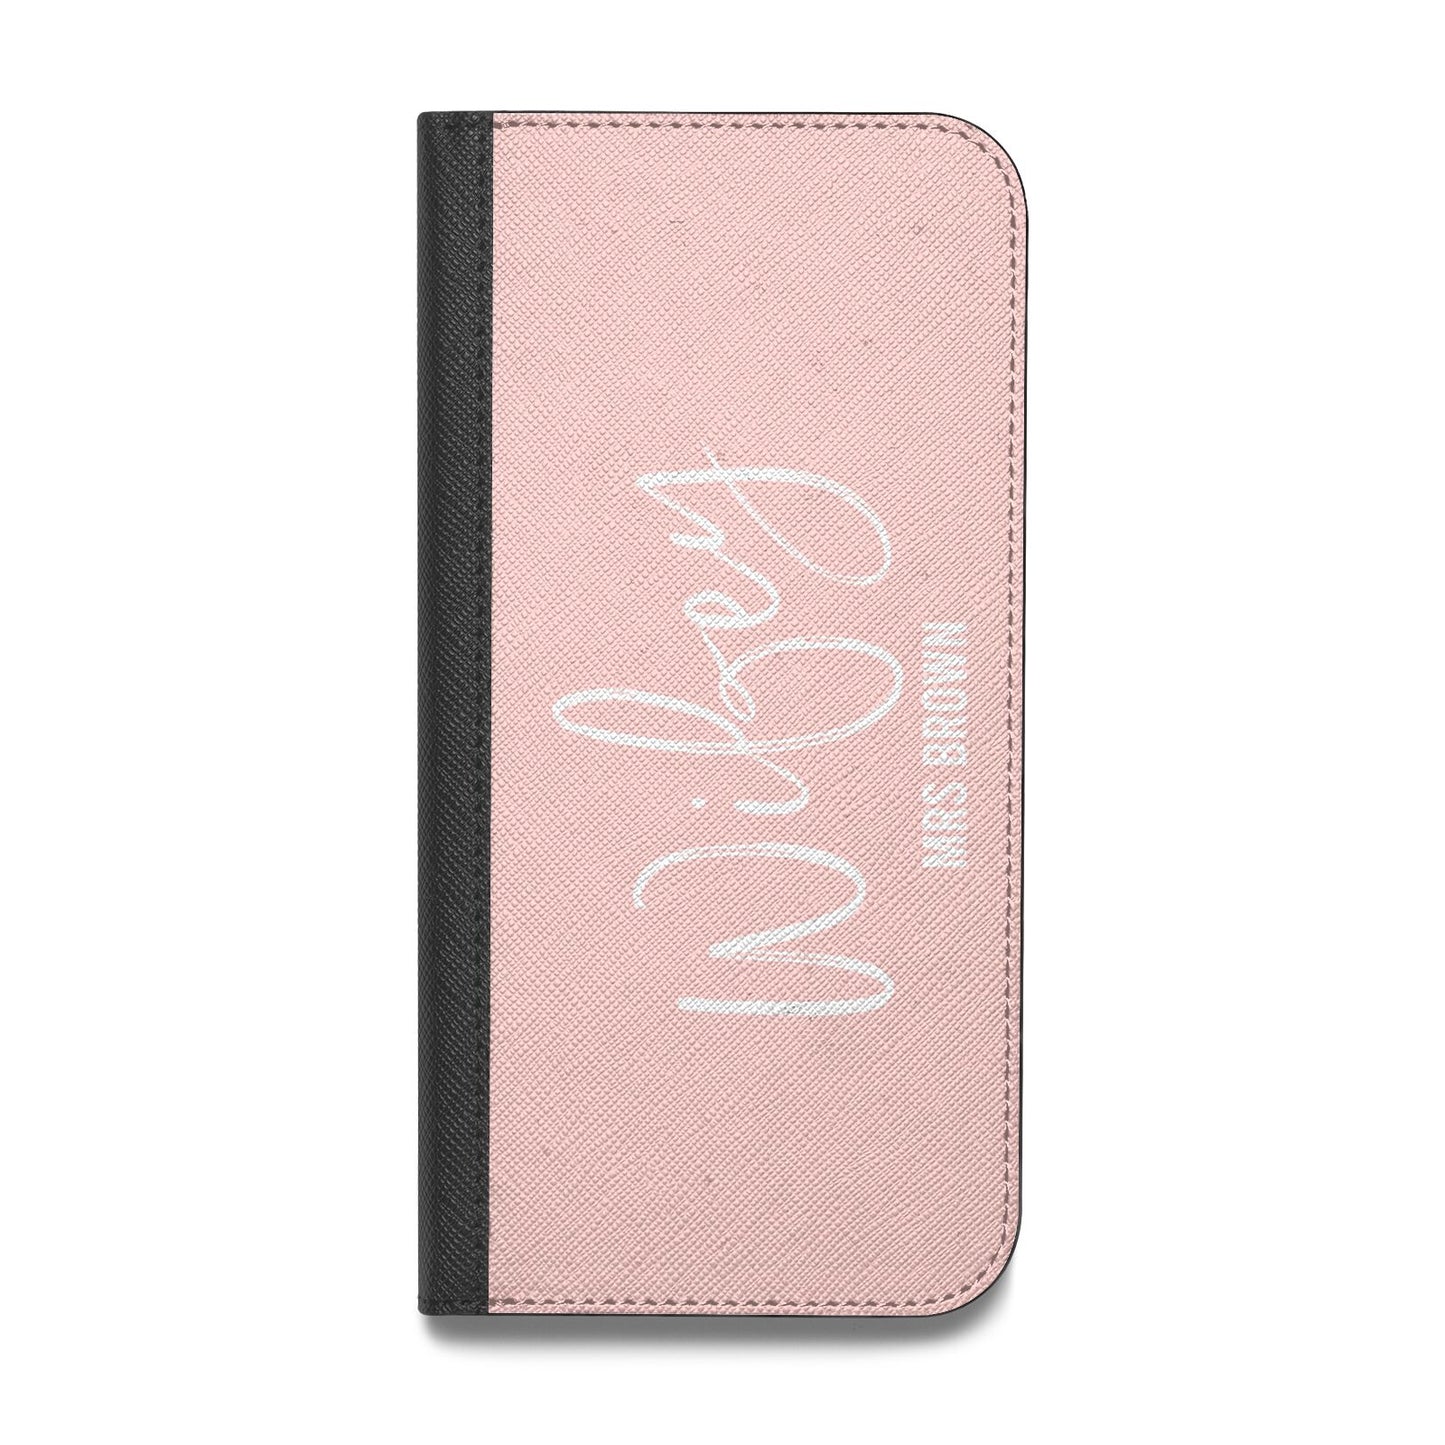 Personalised Wifey Pink Vegan Leather Flip iPhone Case